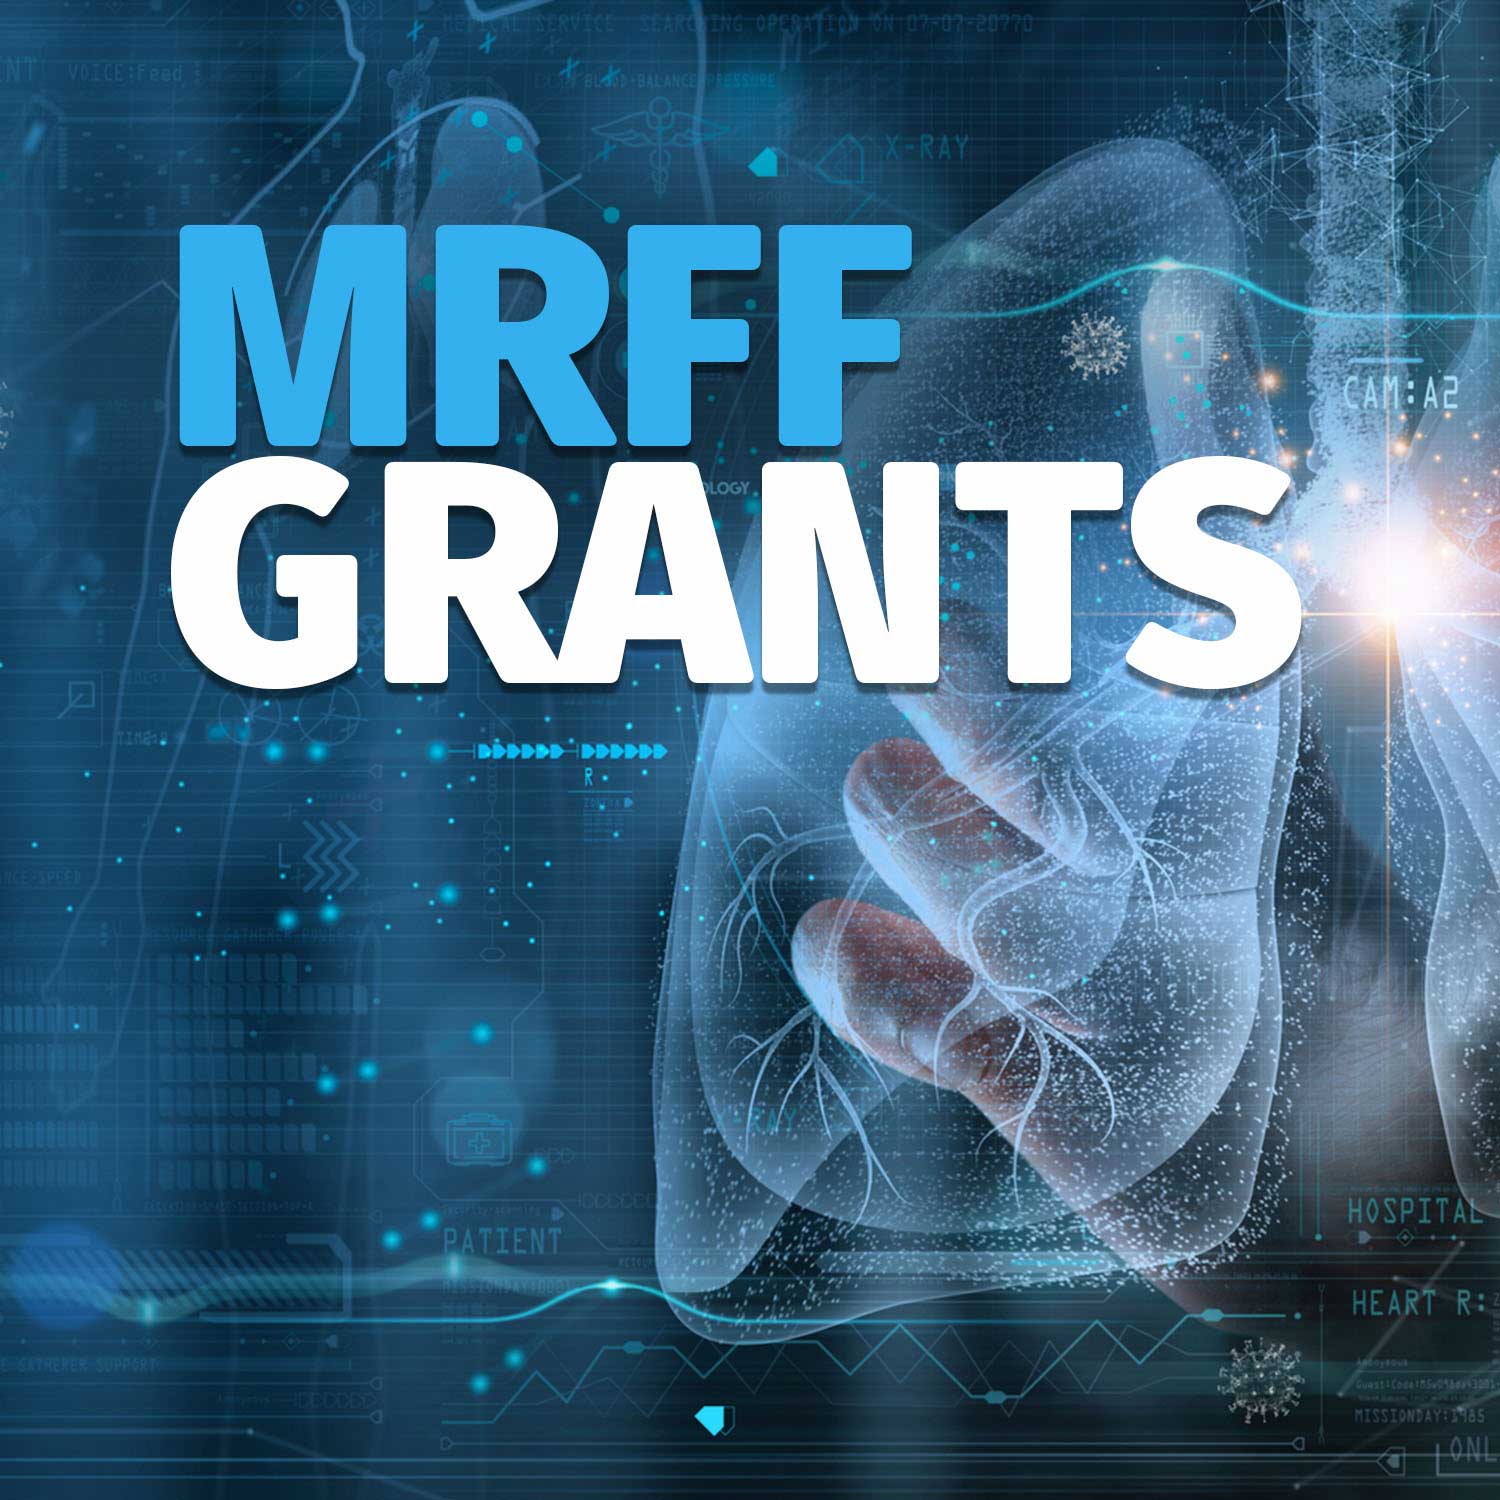 MRFF grants^empty:{ds__assetid^as_asset:asset_name}